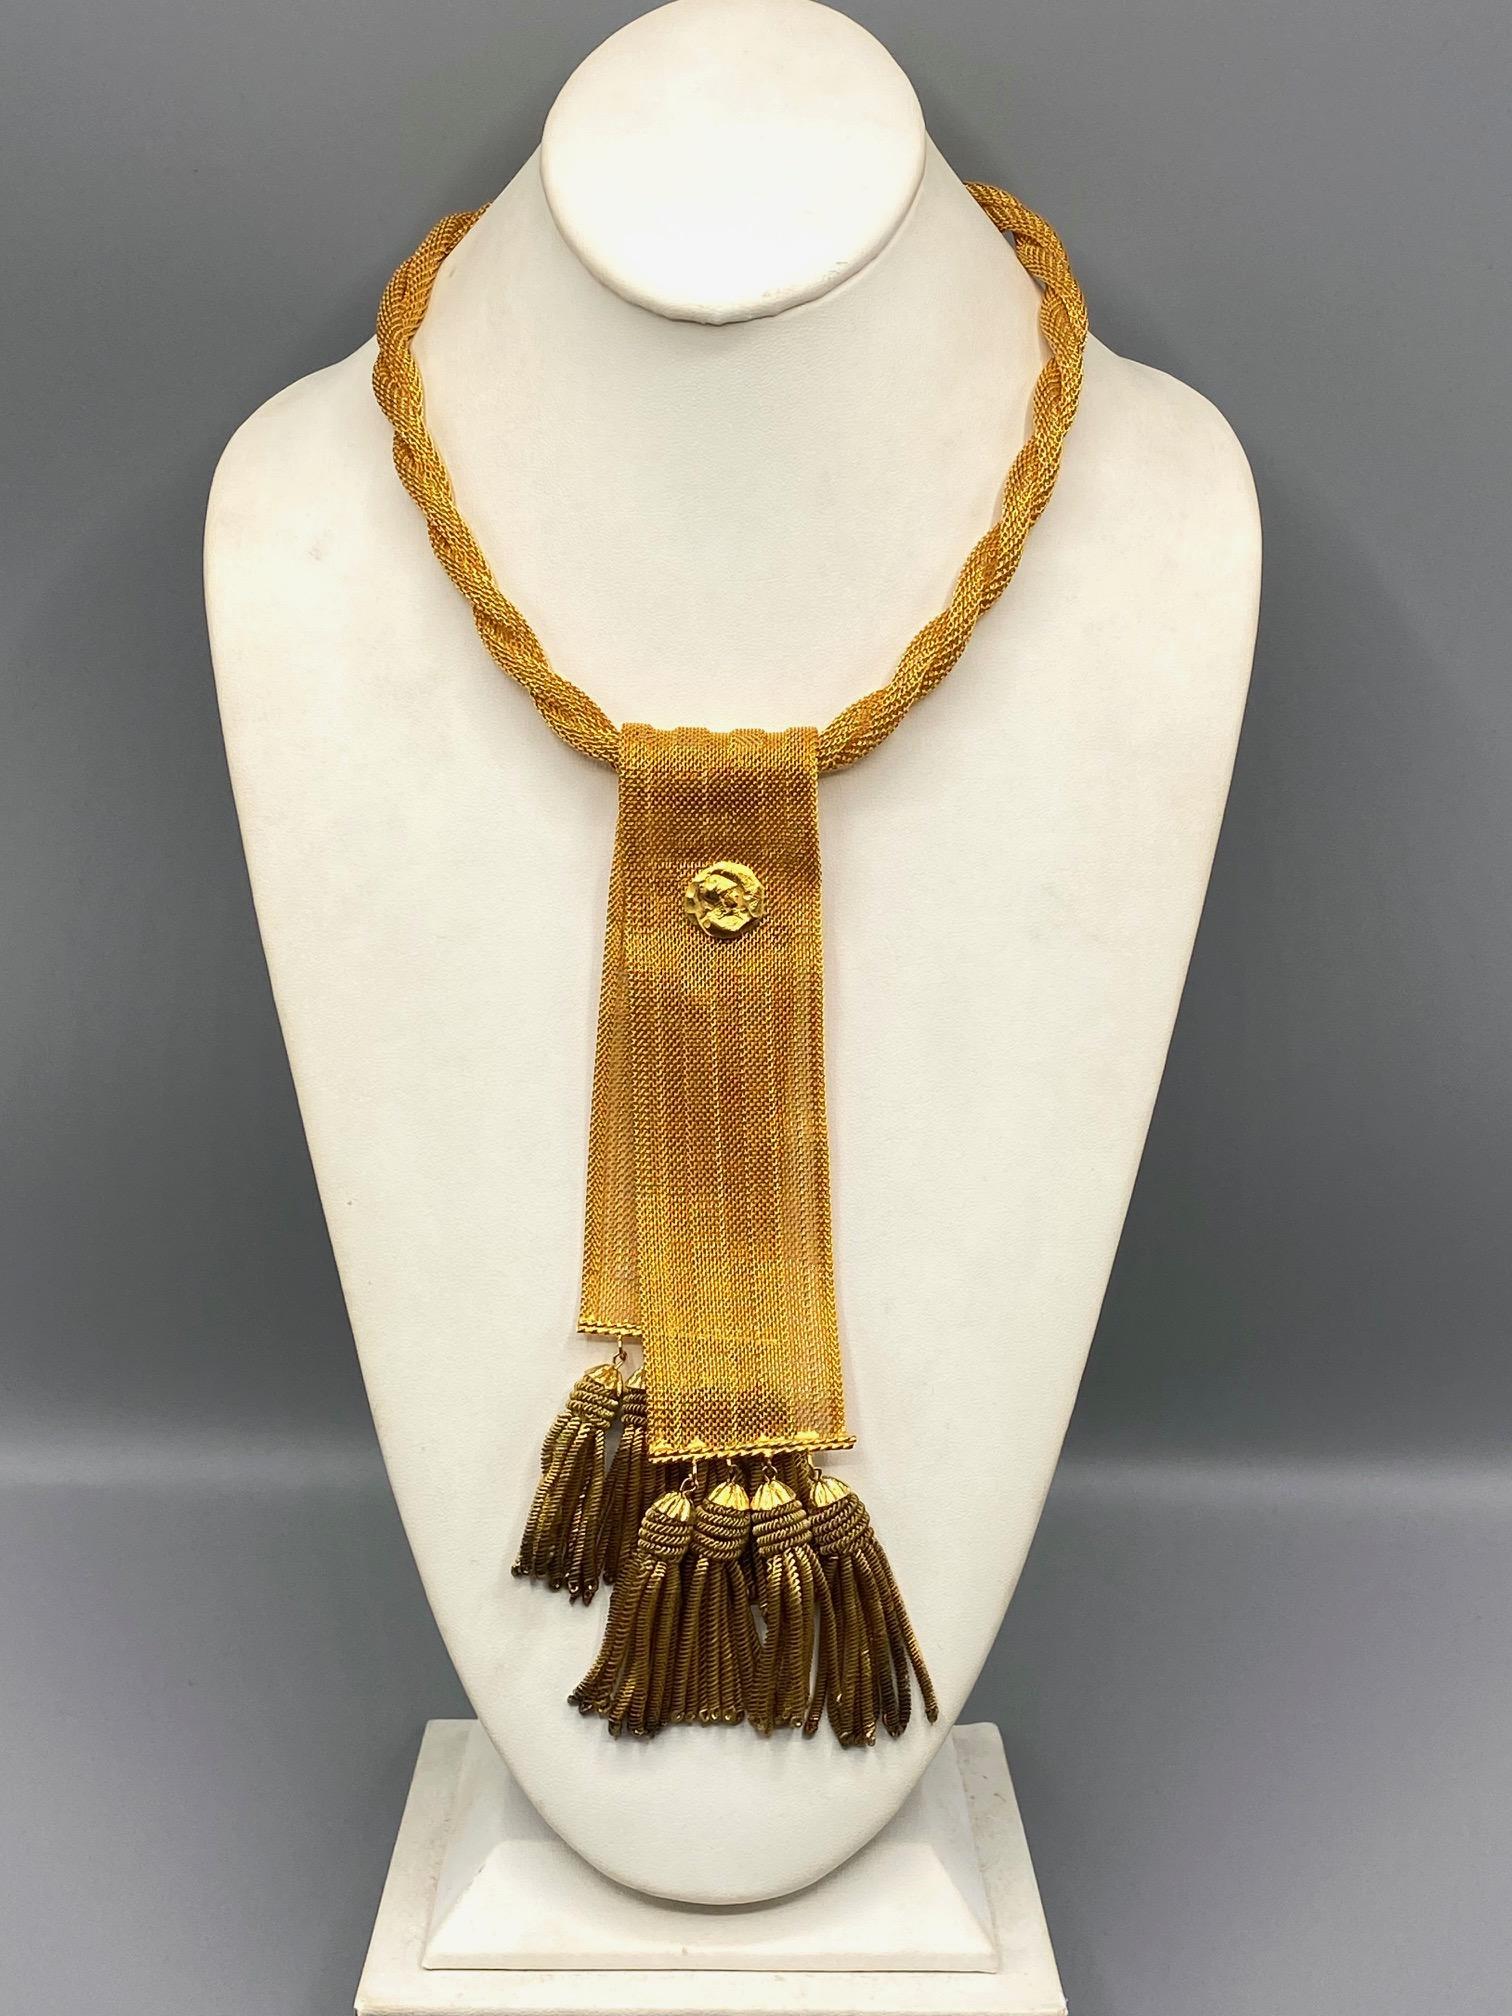 William DeLillo 1970s Mesh Ribbon & Tassel Brooch & Pendant Necklace In Good Condition For Sale In New York, NY